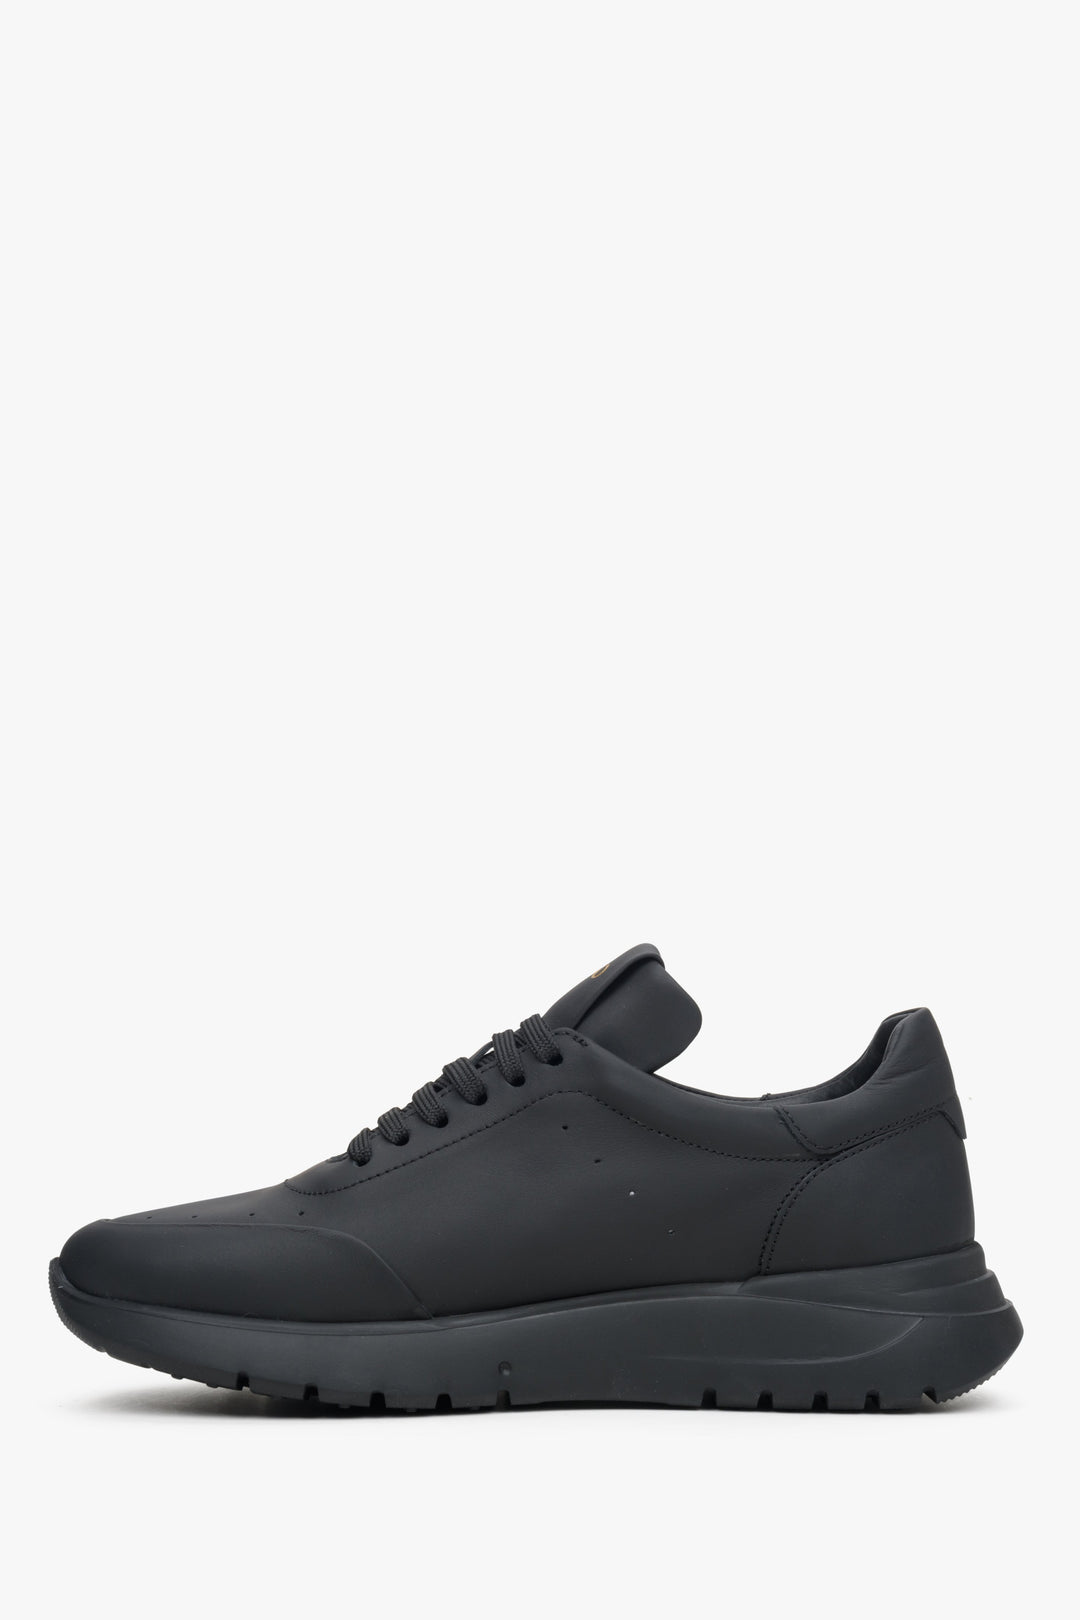 Czarne, skórzane sneakersy damskie Estro - profil buta.